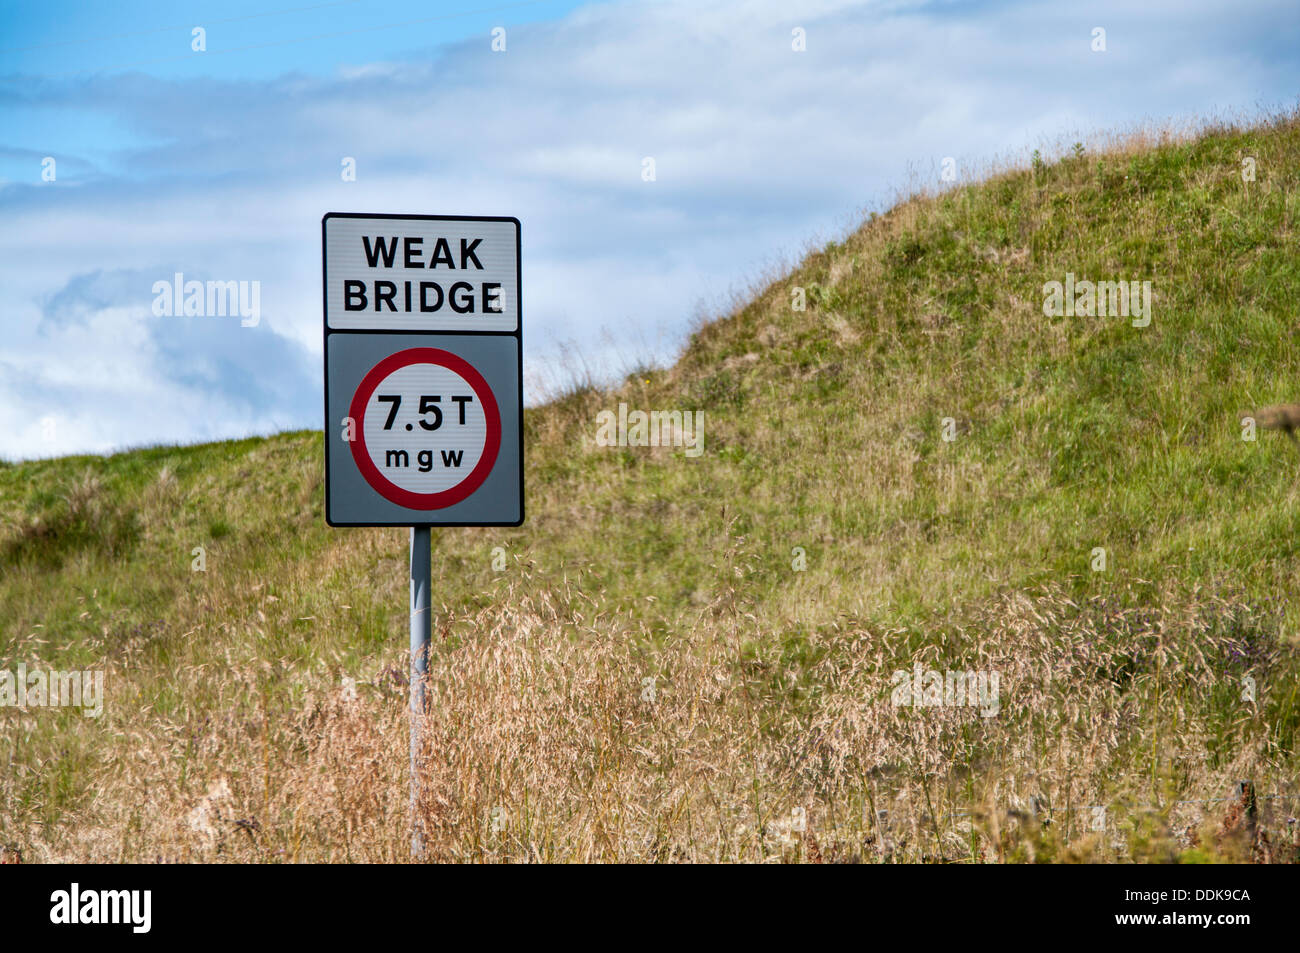 A weak bridge on UK road. Stock Photo